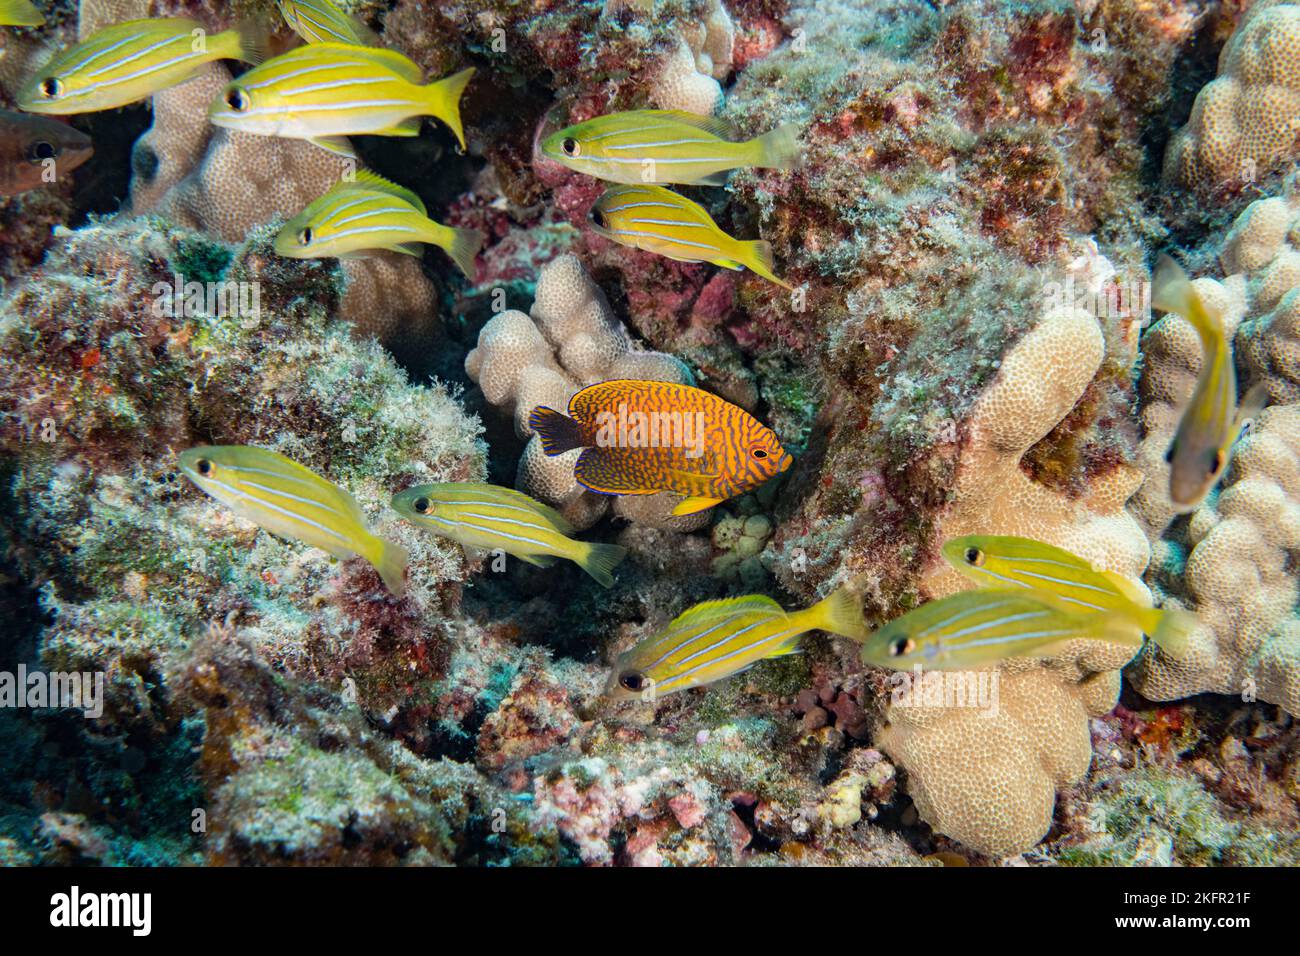 Pargo juvenil de raya azul o ta'ape, Lutjanus kasmira, y el pez ángel endémico juvenil de Potter, Centropyge potteri, en el arrecife de coral, Kona, Hawaii, EE.UU Foto de stock